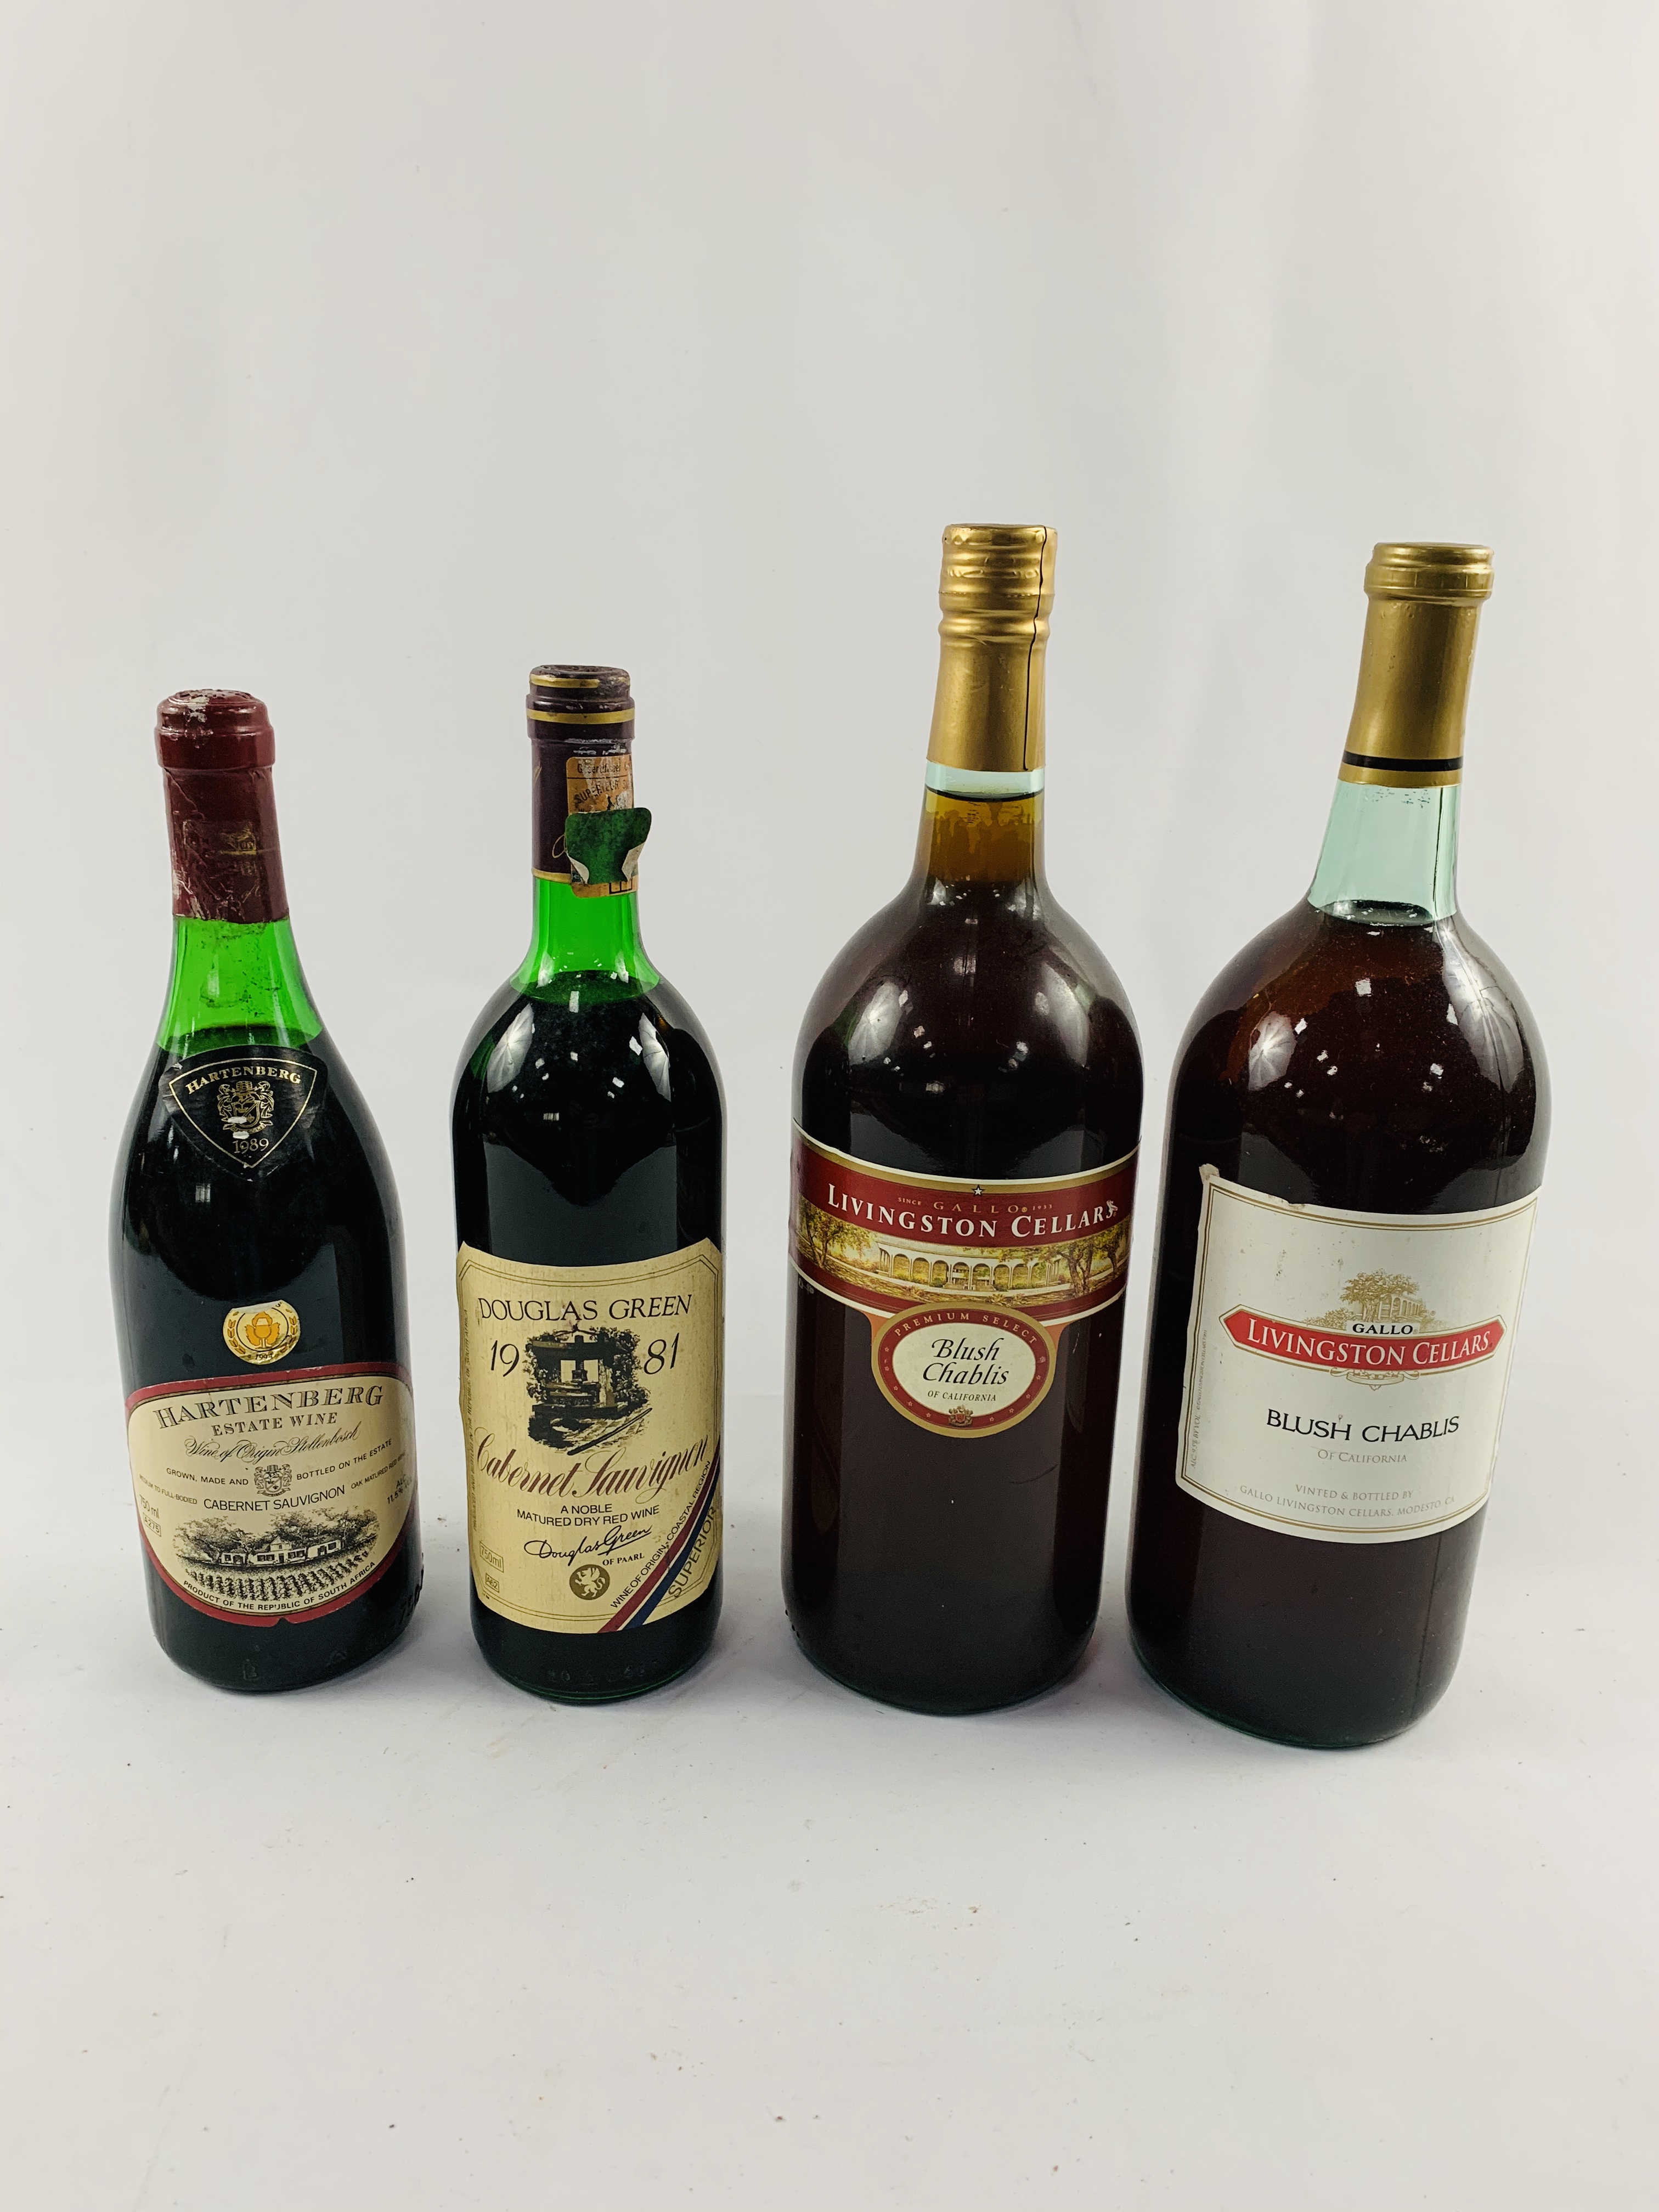 4 bottles of vintage wine, including 1981 Douglas Green (Stellenbosch) Cabernet Sauvignon Superior a